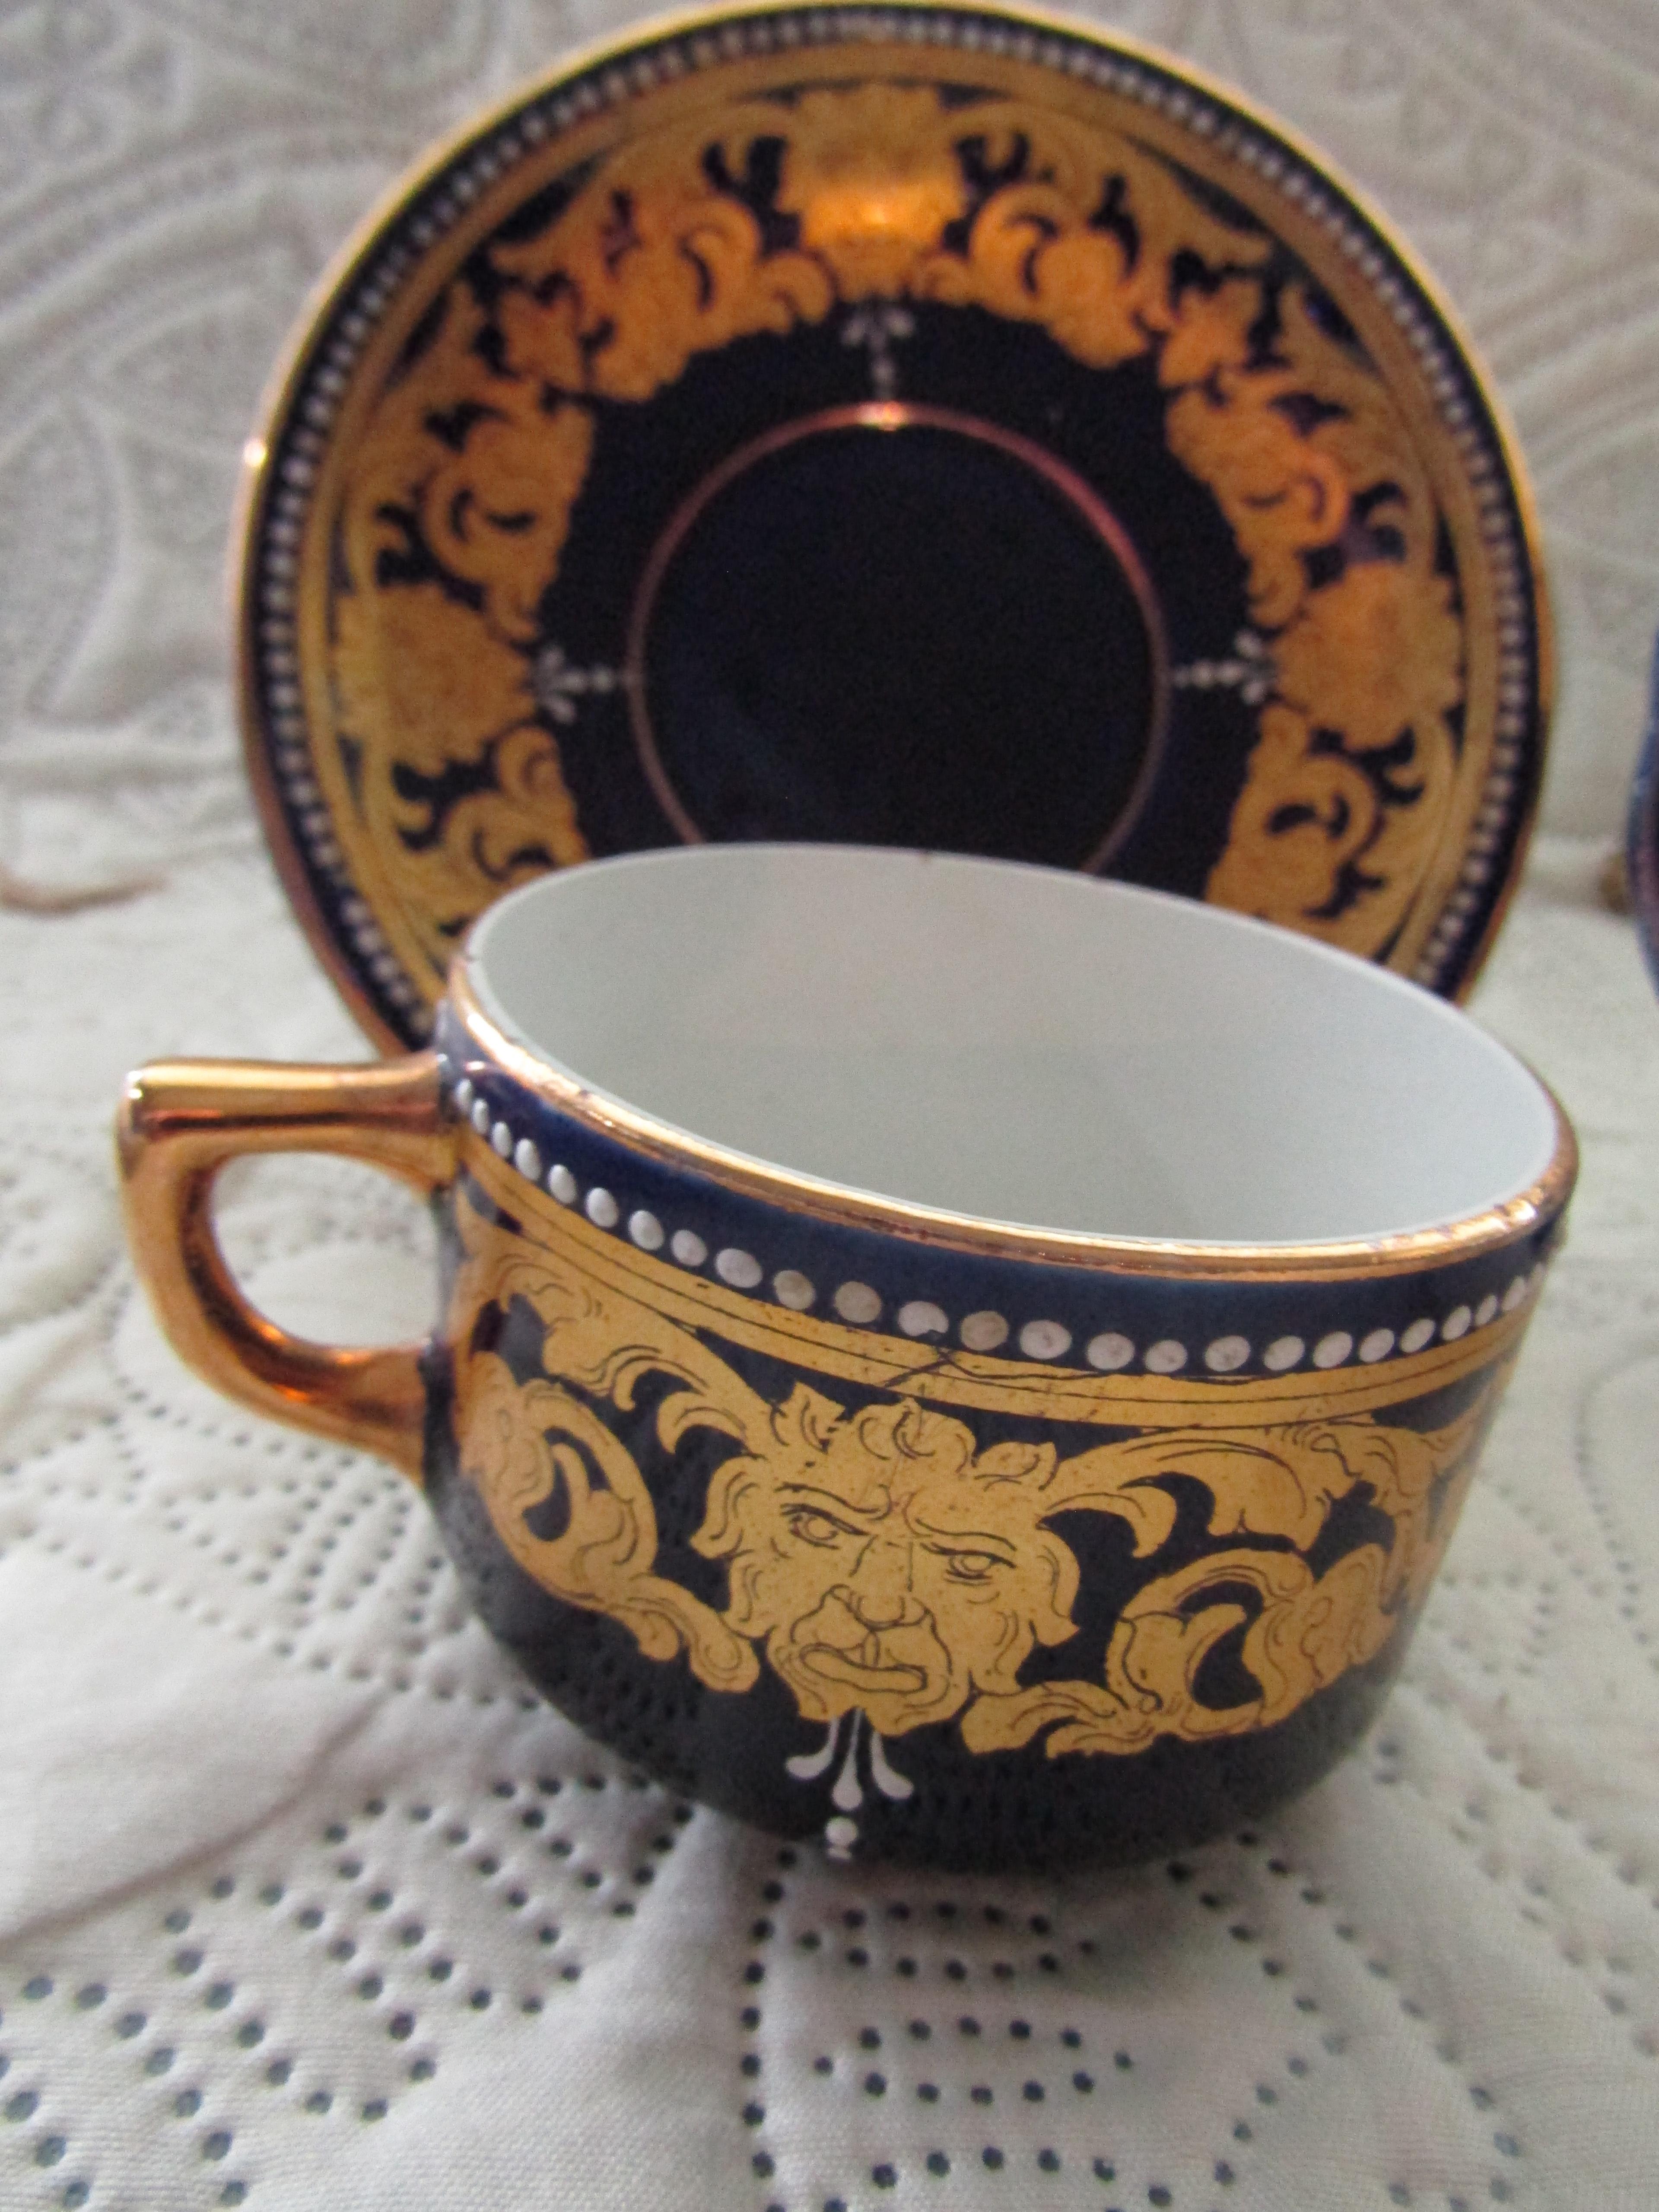 Antique/Vintage Teacups and Saucers, Stamped